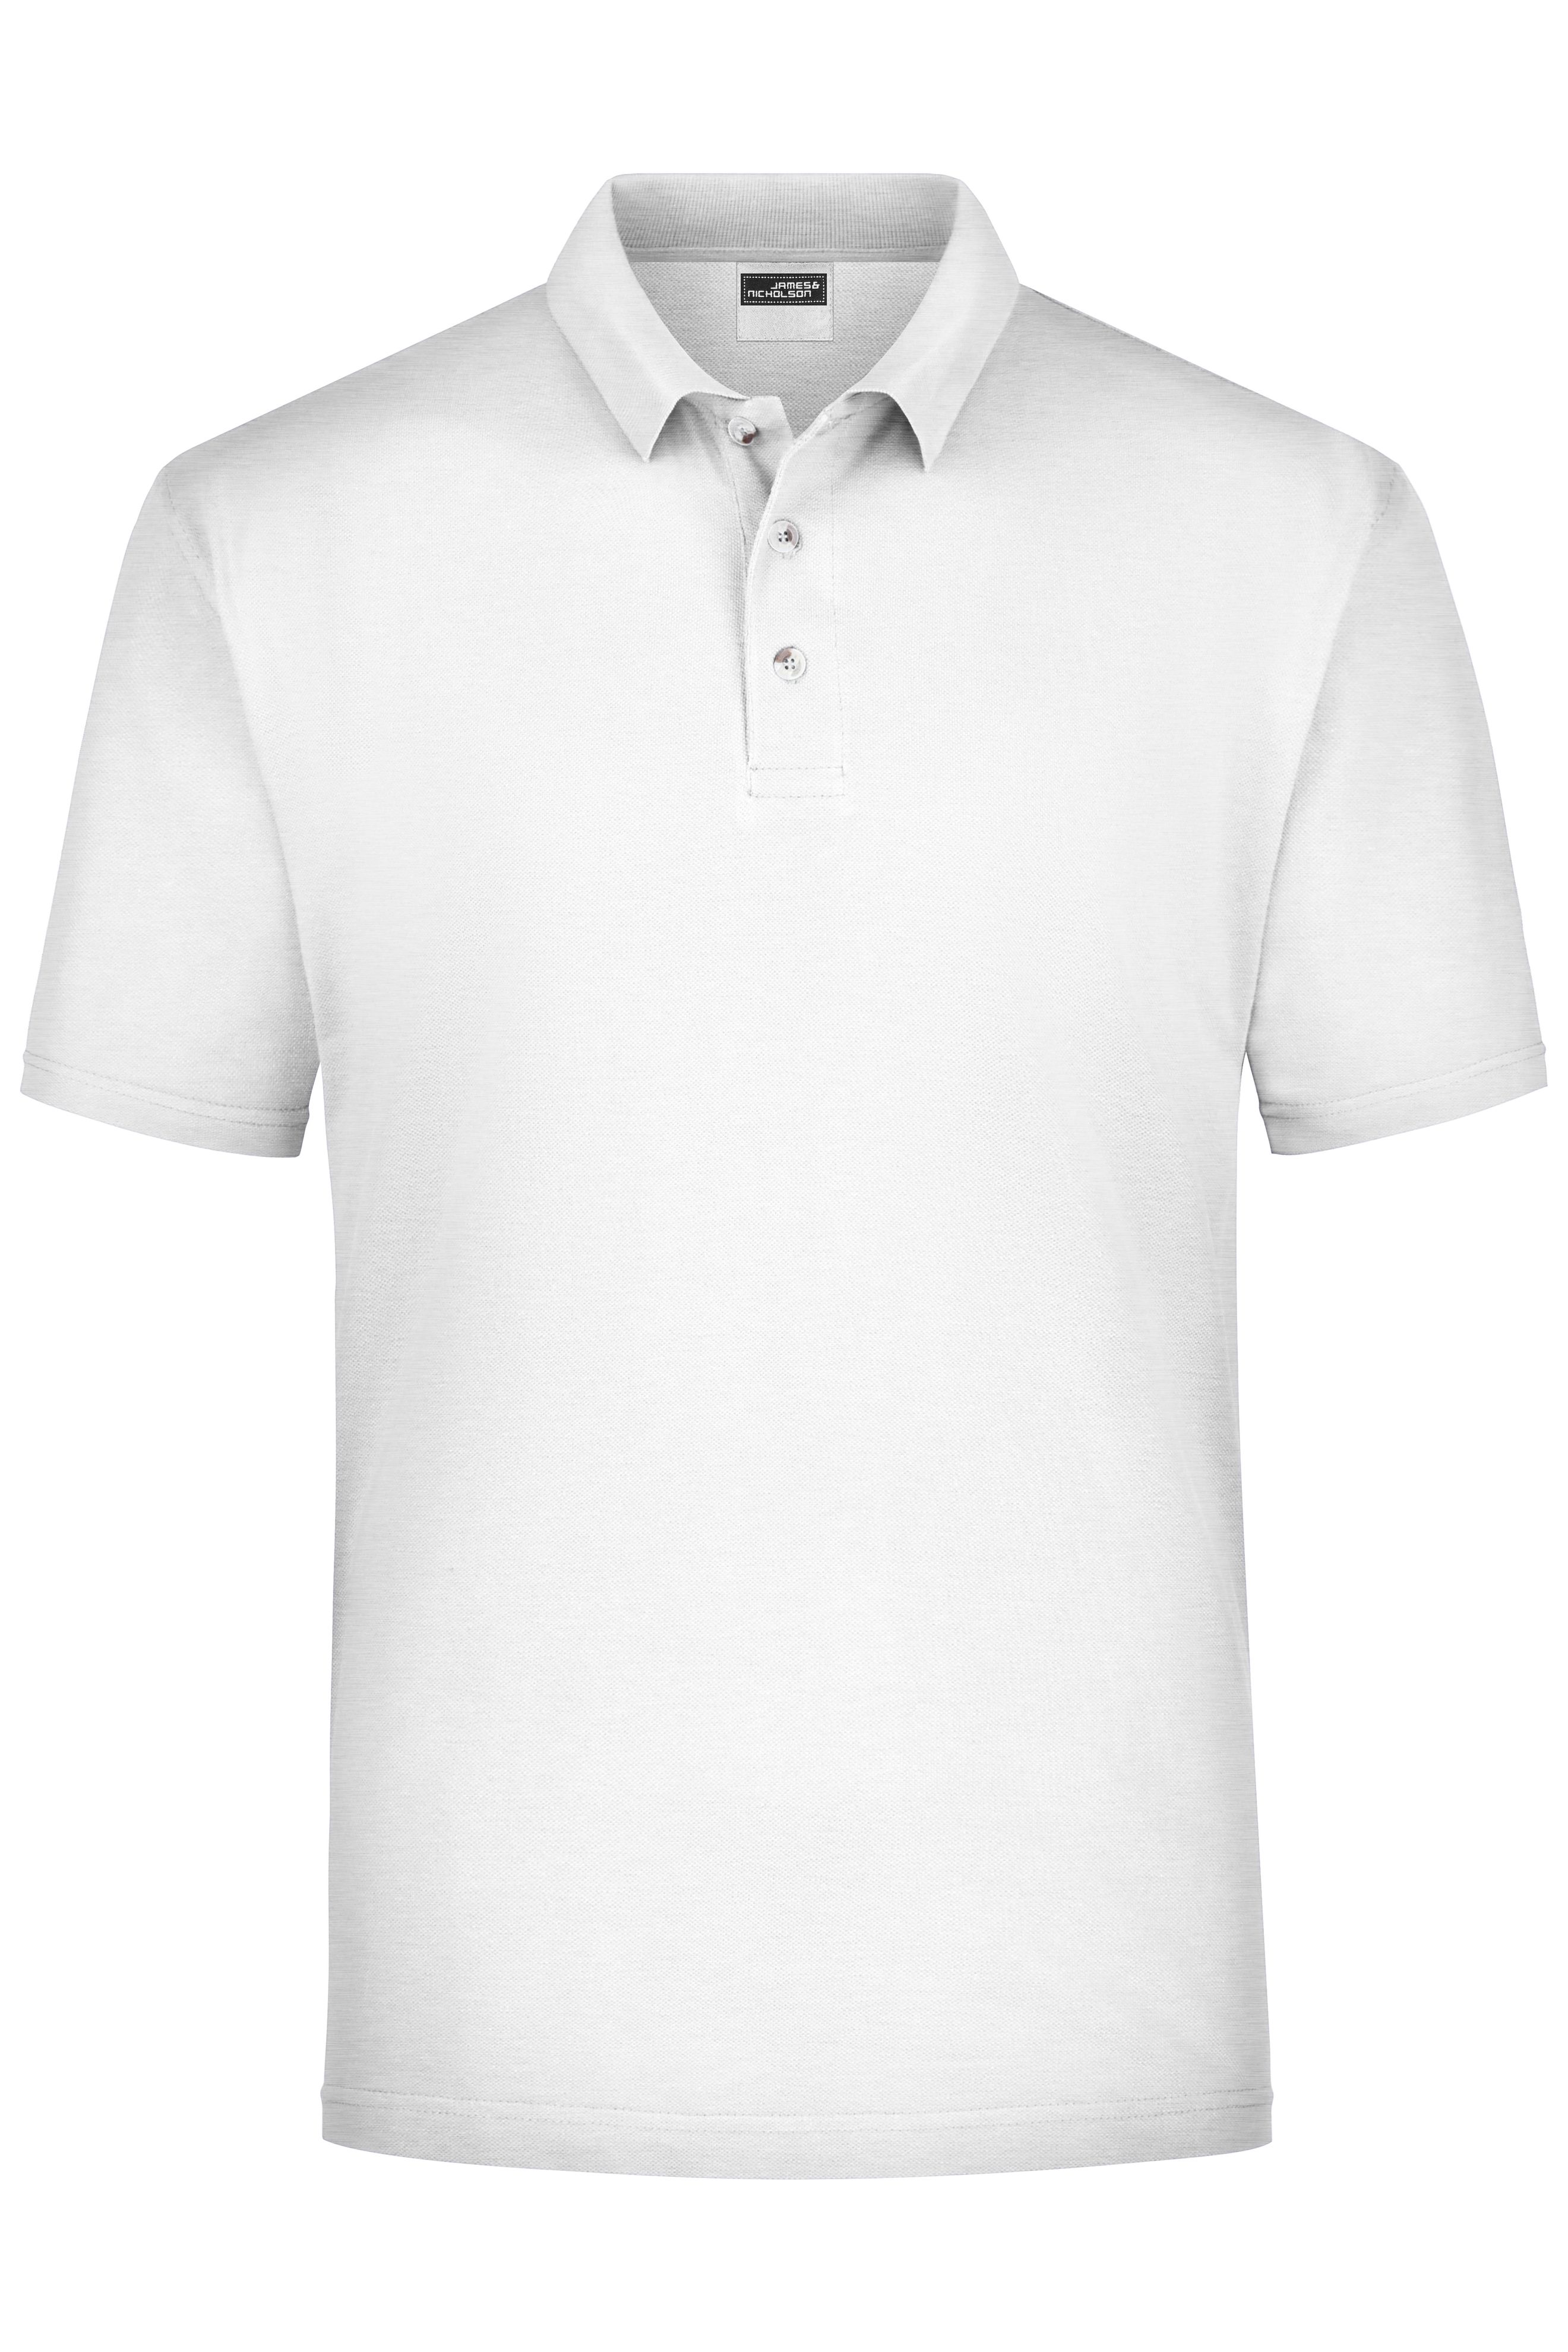 Weißes Poloshirt Herren Kleidung Tops & T-Shirts T-Shirts Polohemden James & Nicholson Polohemden 